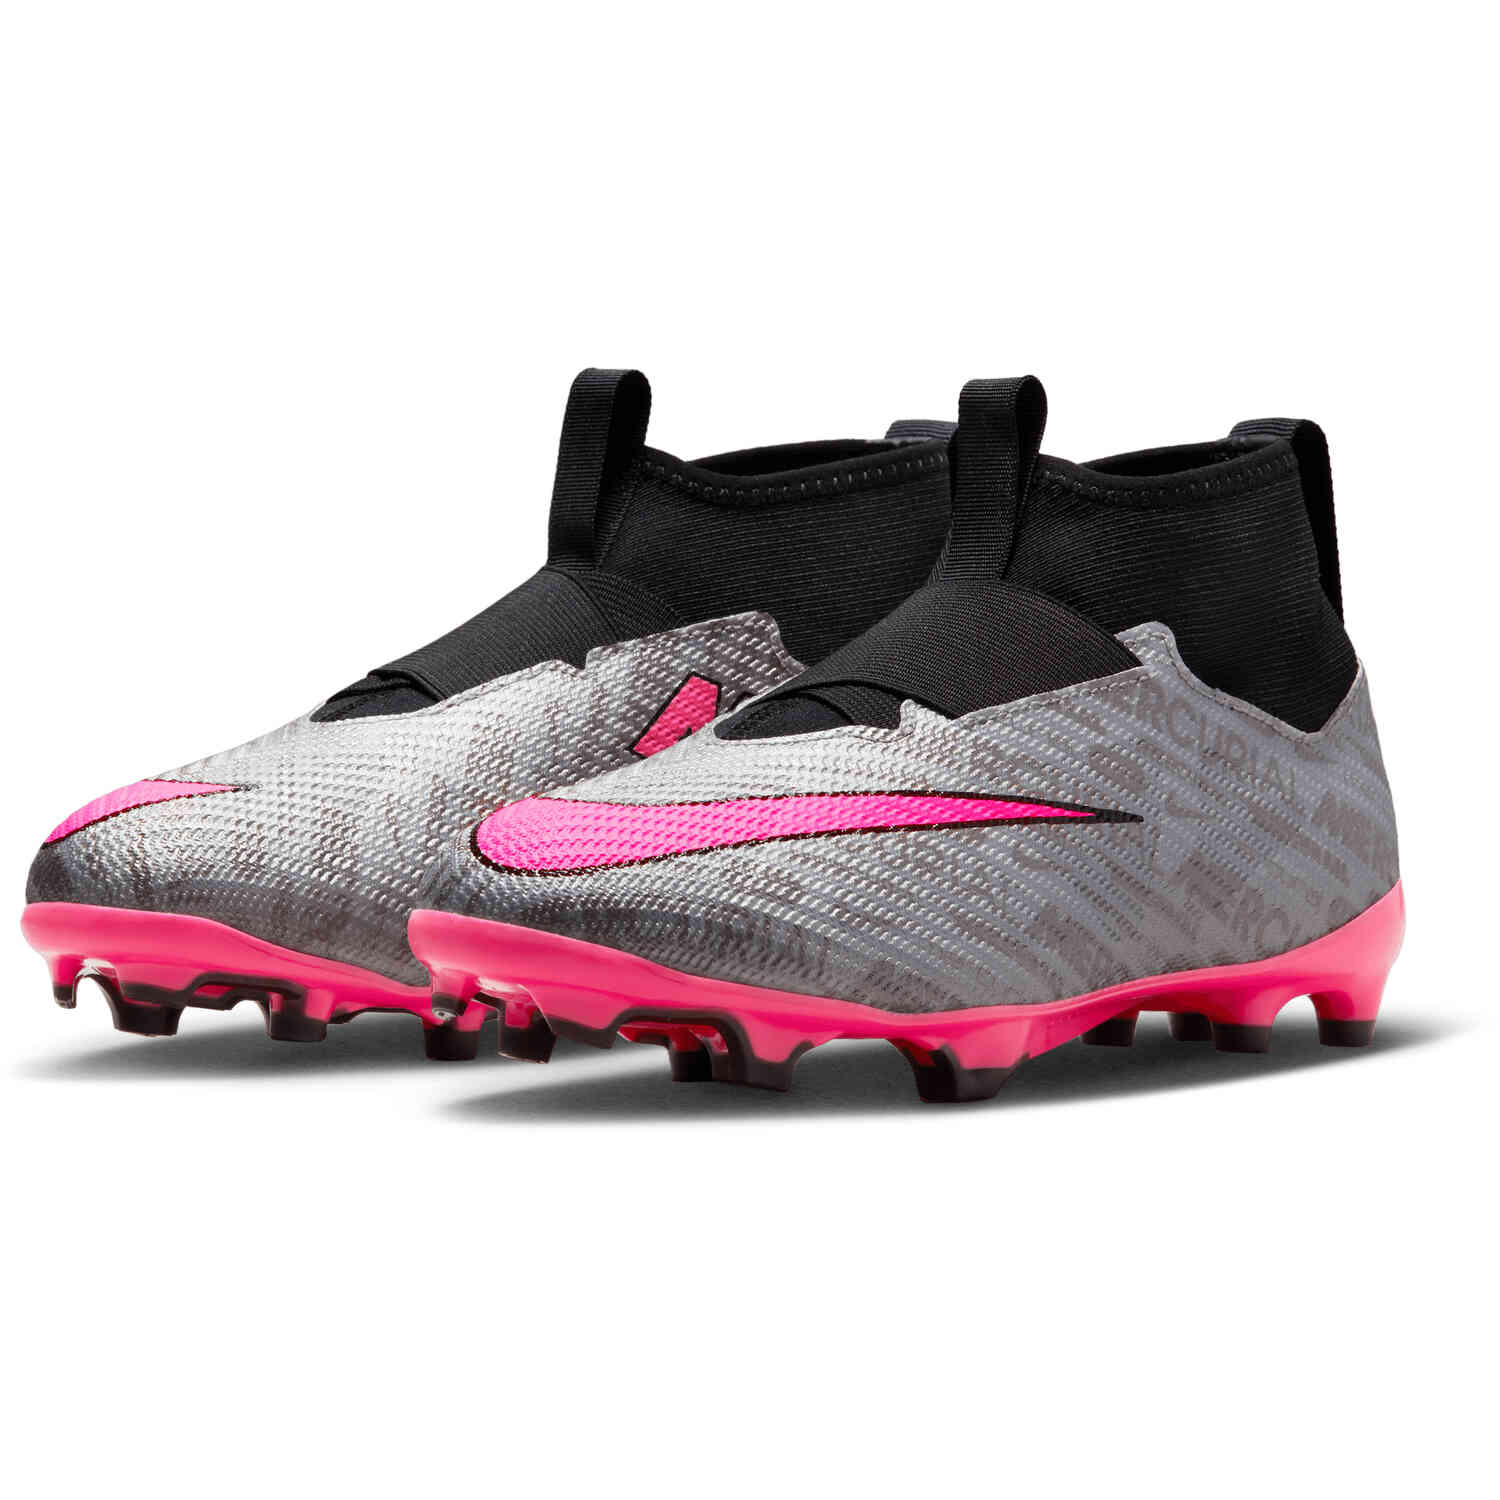 Nike Women's Vapor Drive SE Turf Lacrosse Cleats, Size 9, White/Pink